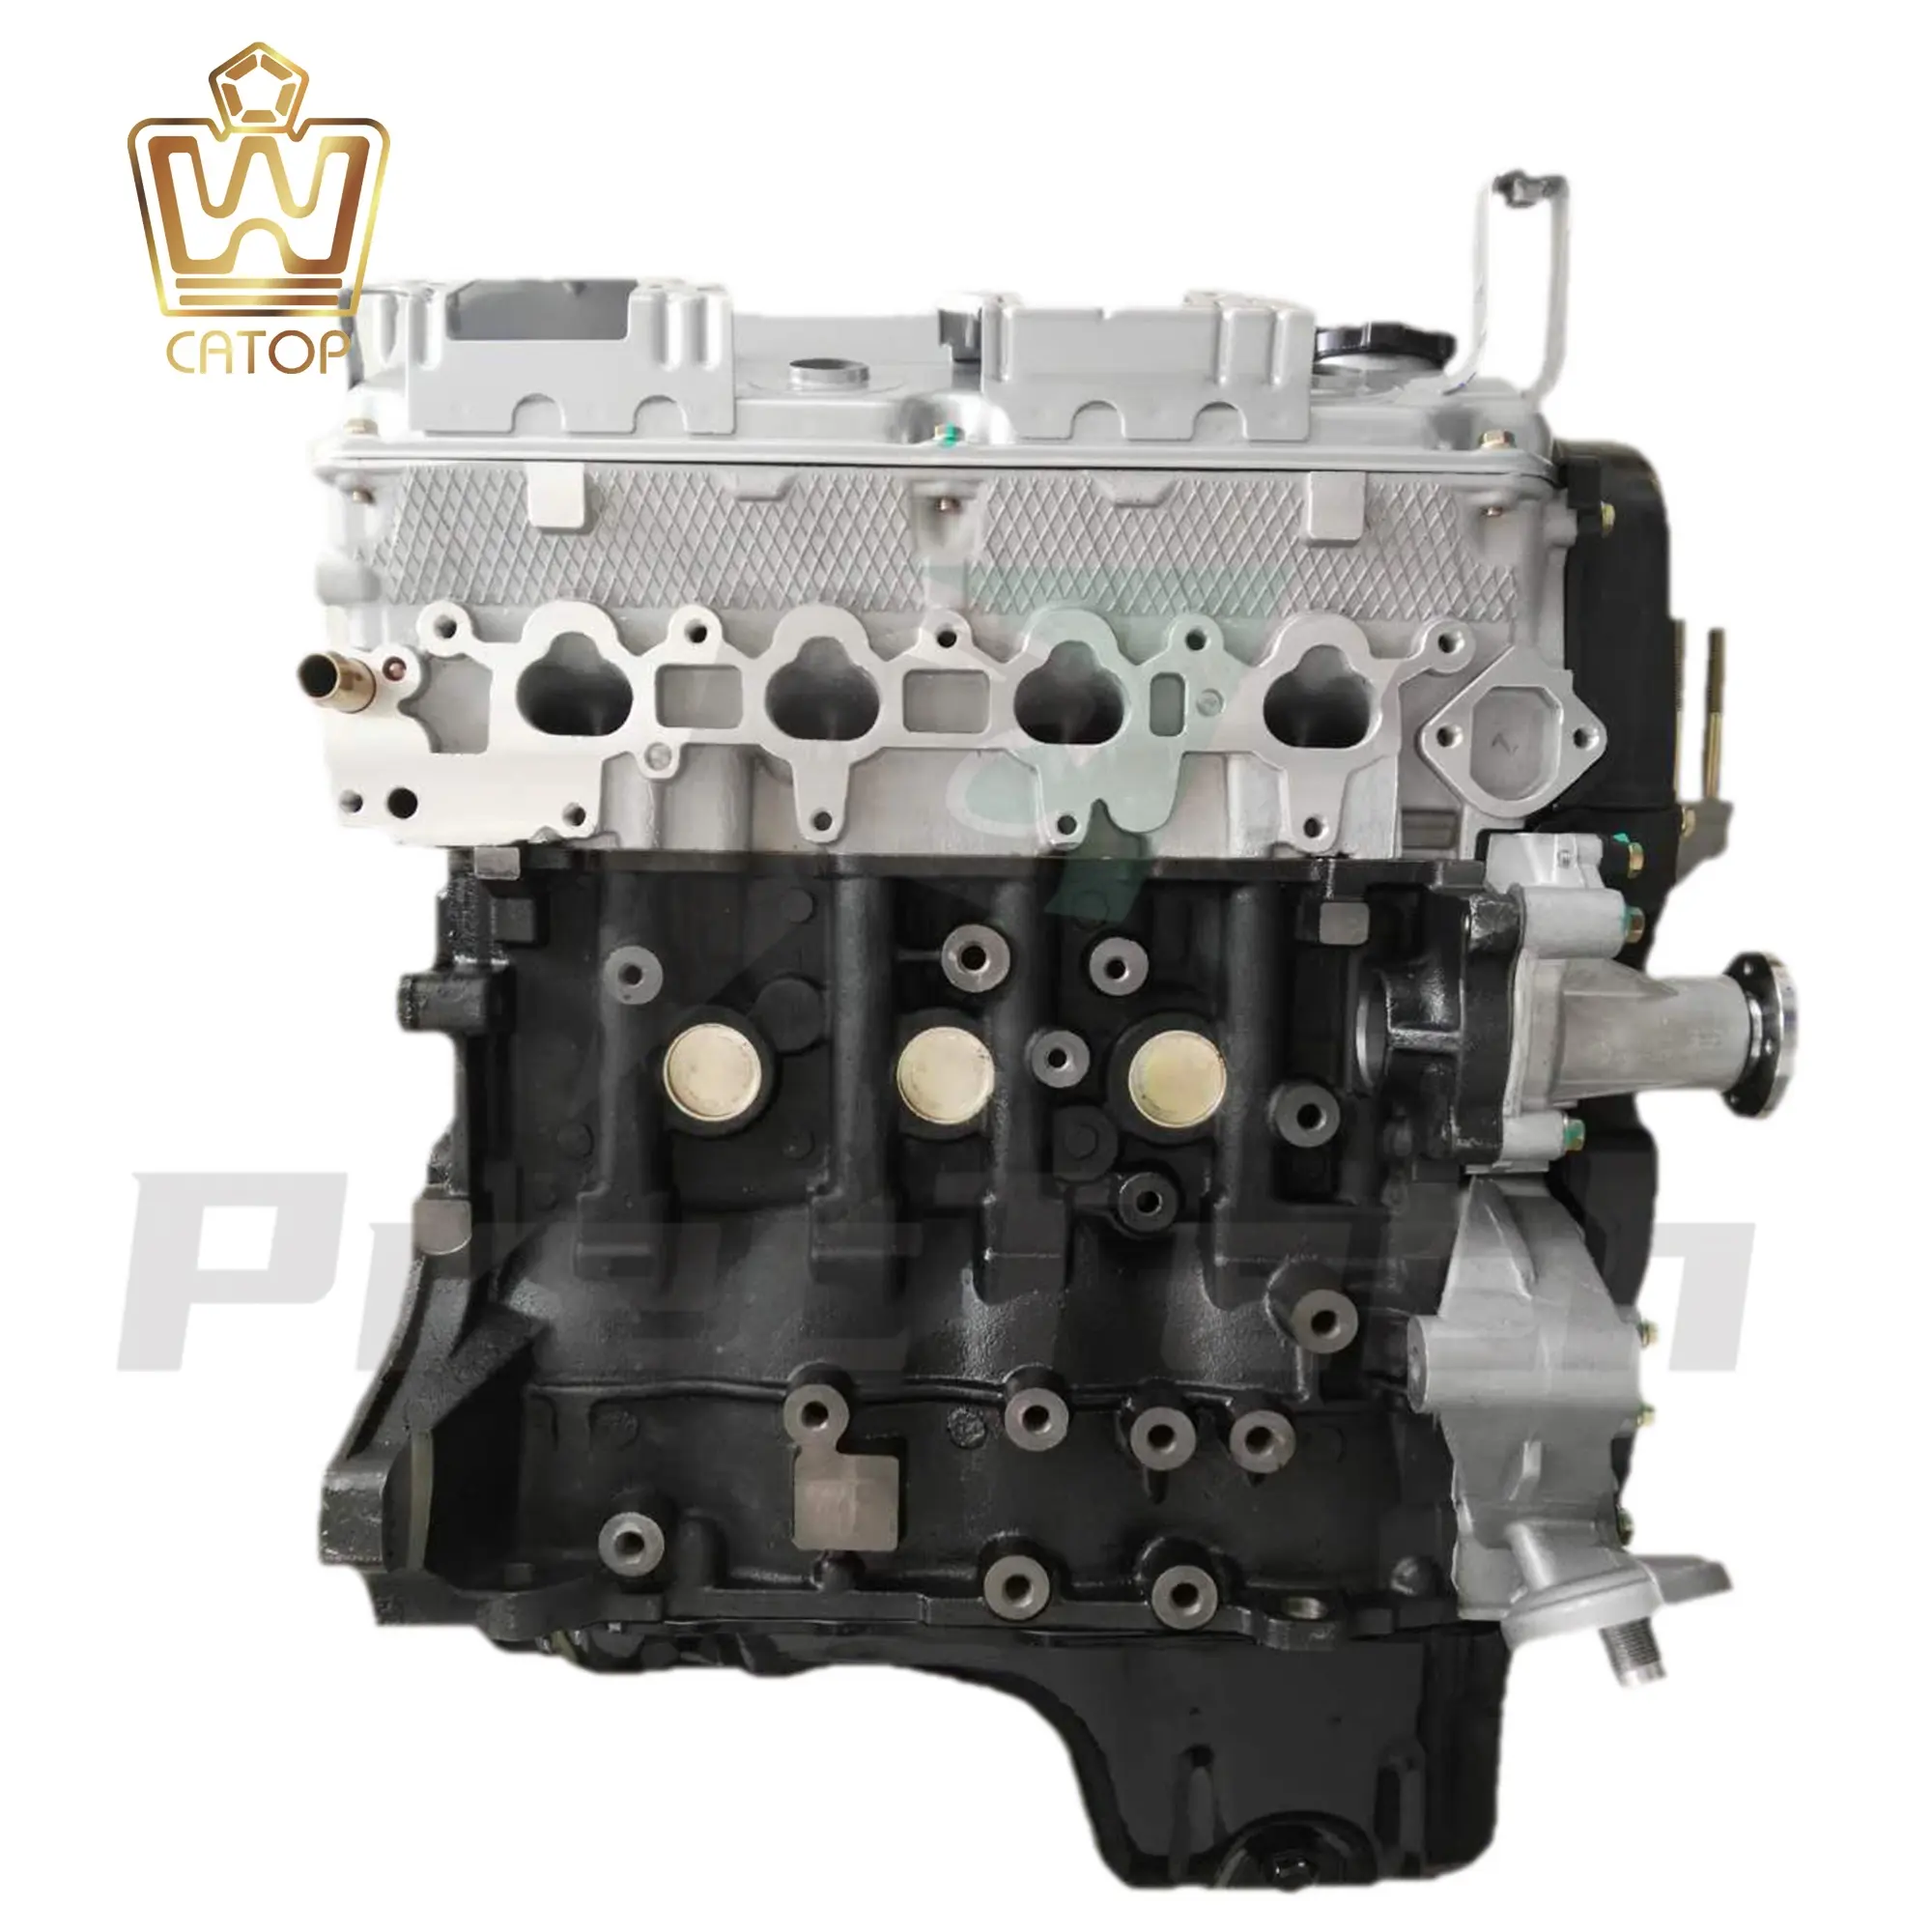 High Quality New Petrol Engine Parts Mitsubishi DA4G18 1.6L Long Block Cylinder Heads Engine Assy for BYD F3 LANCER Long Block